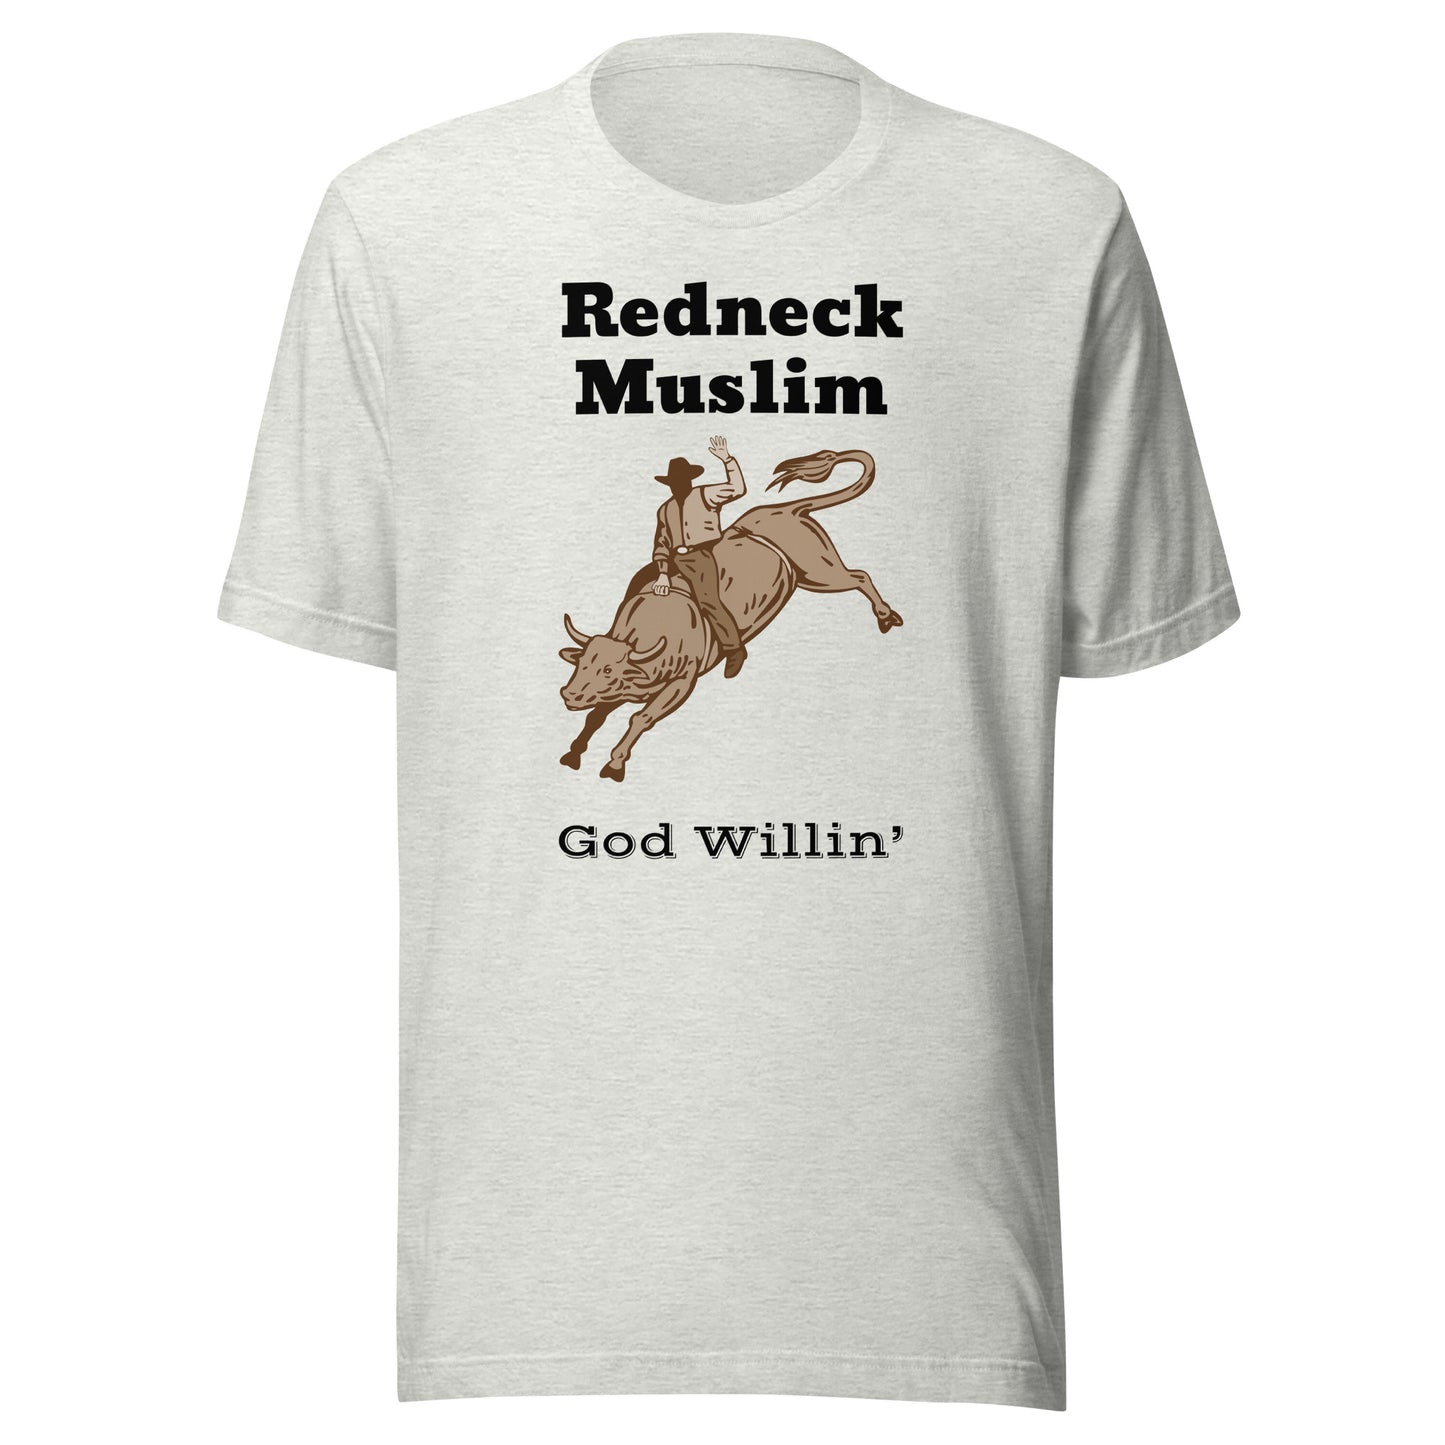 Redneck Muslim T-Shirt